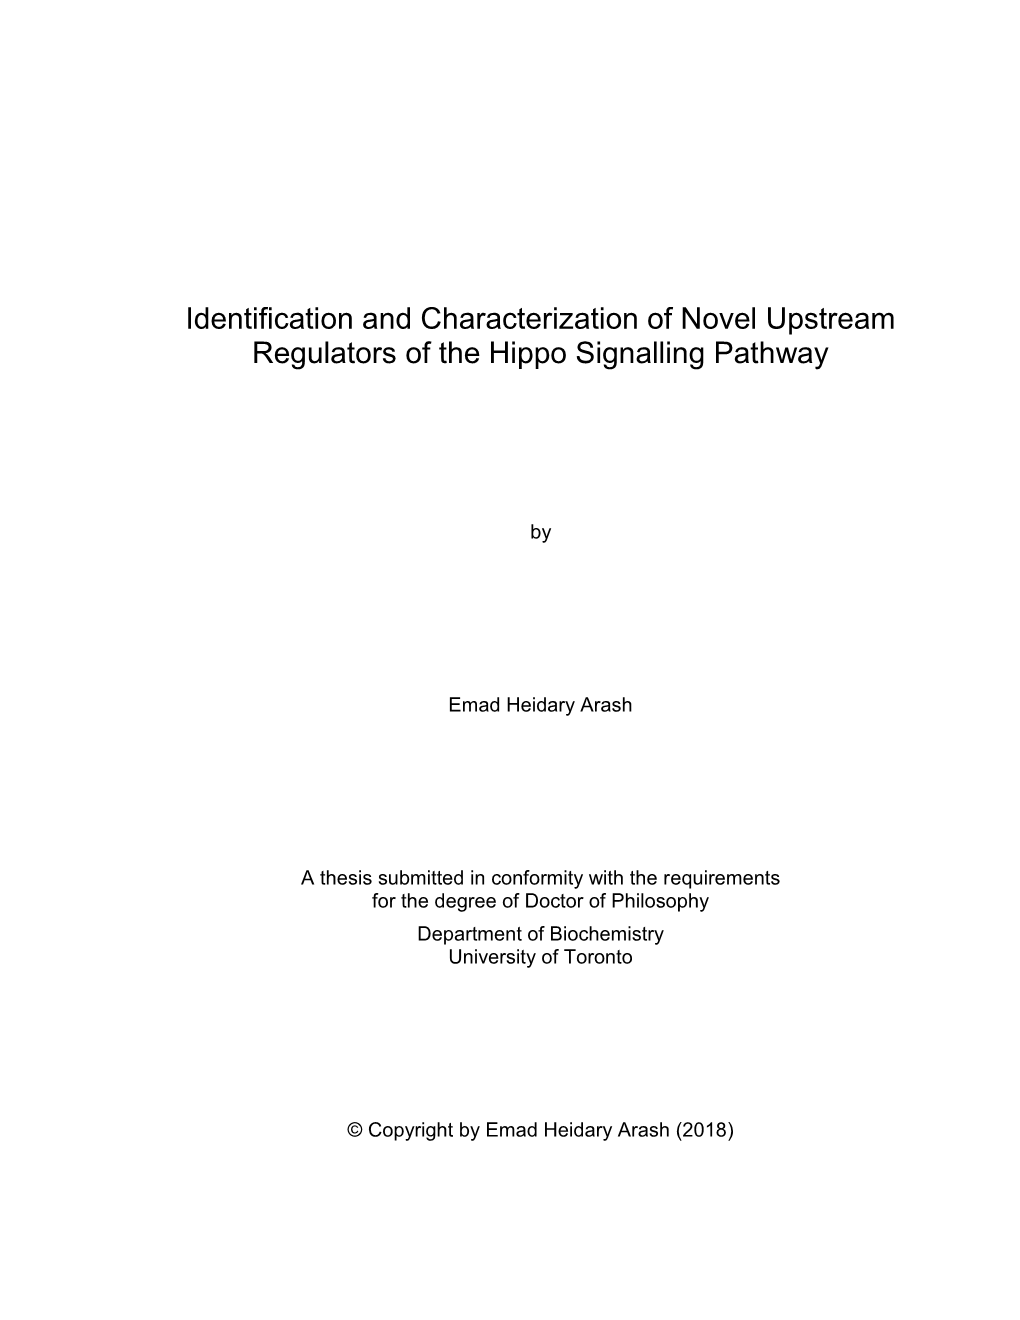 Identification and Characterization of Novel Upstream Regulators of the Hippo Signalling Pathway